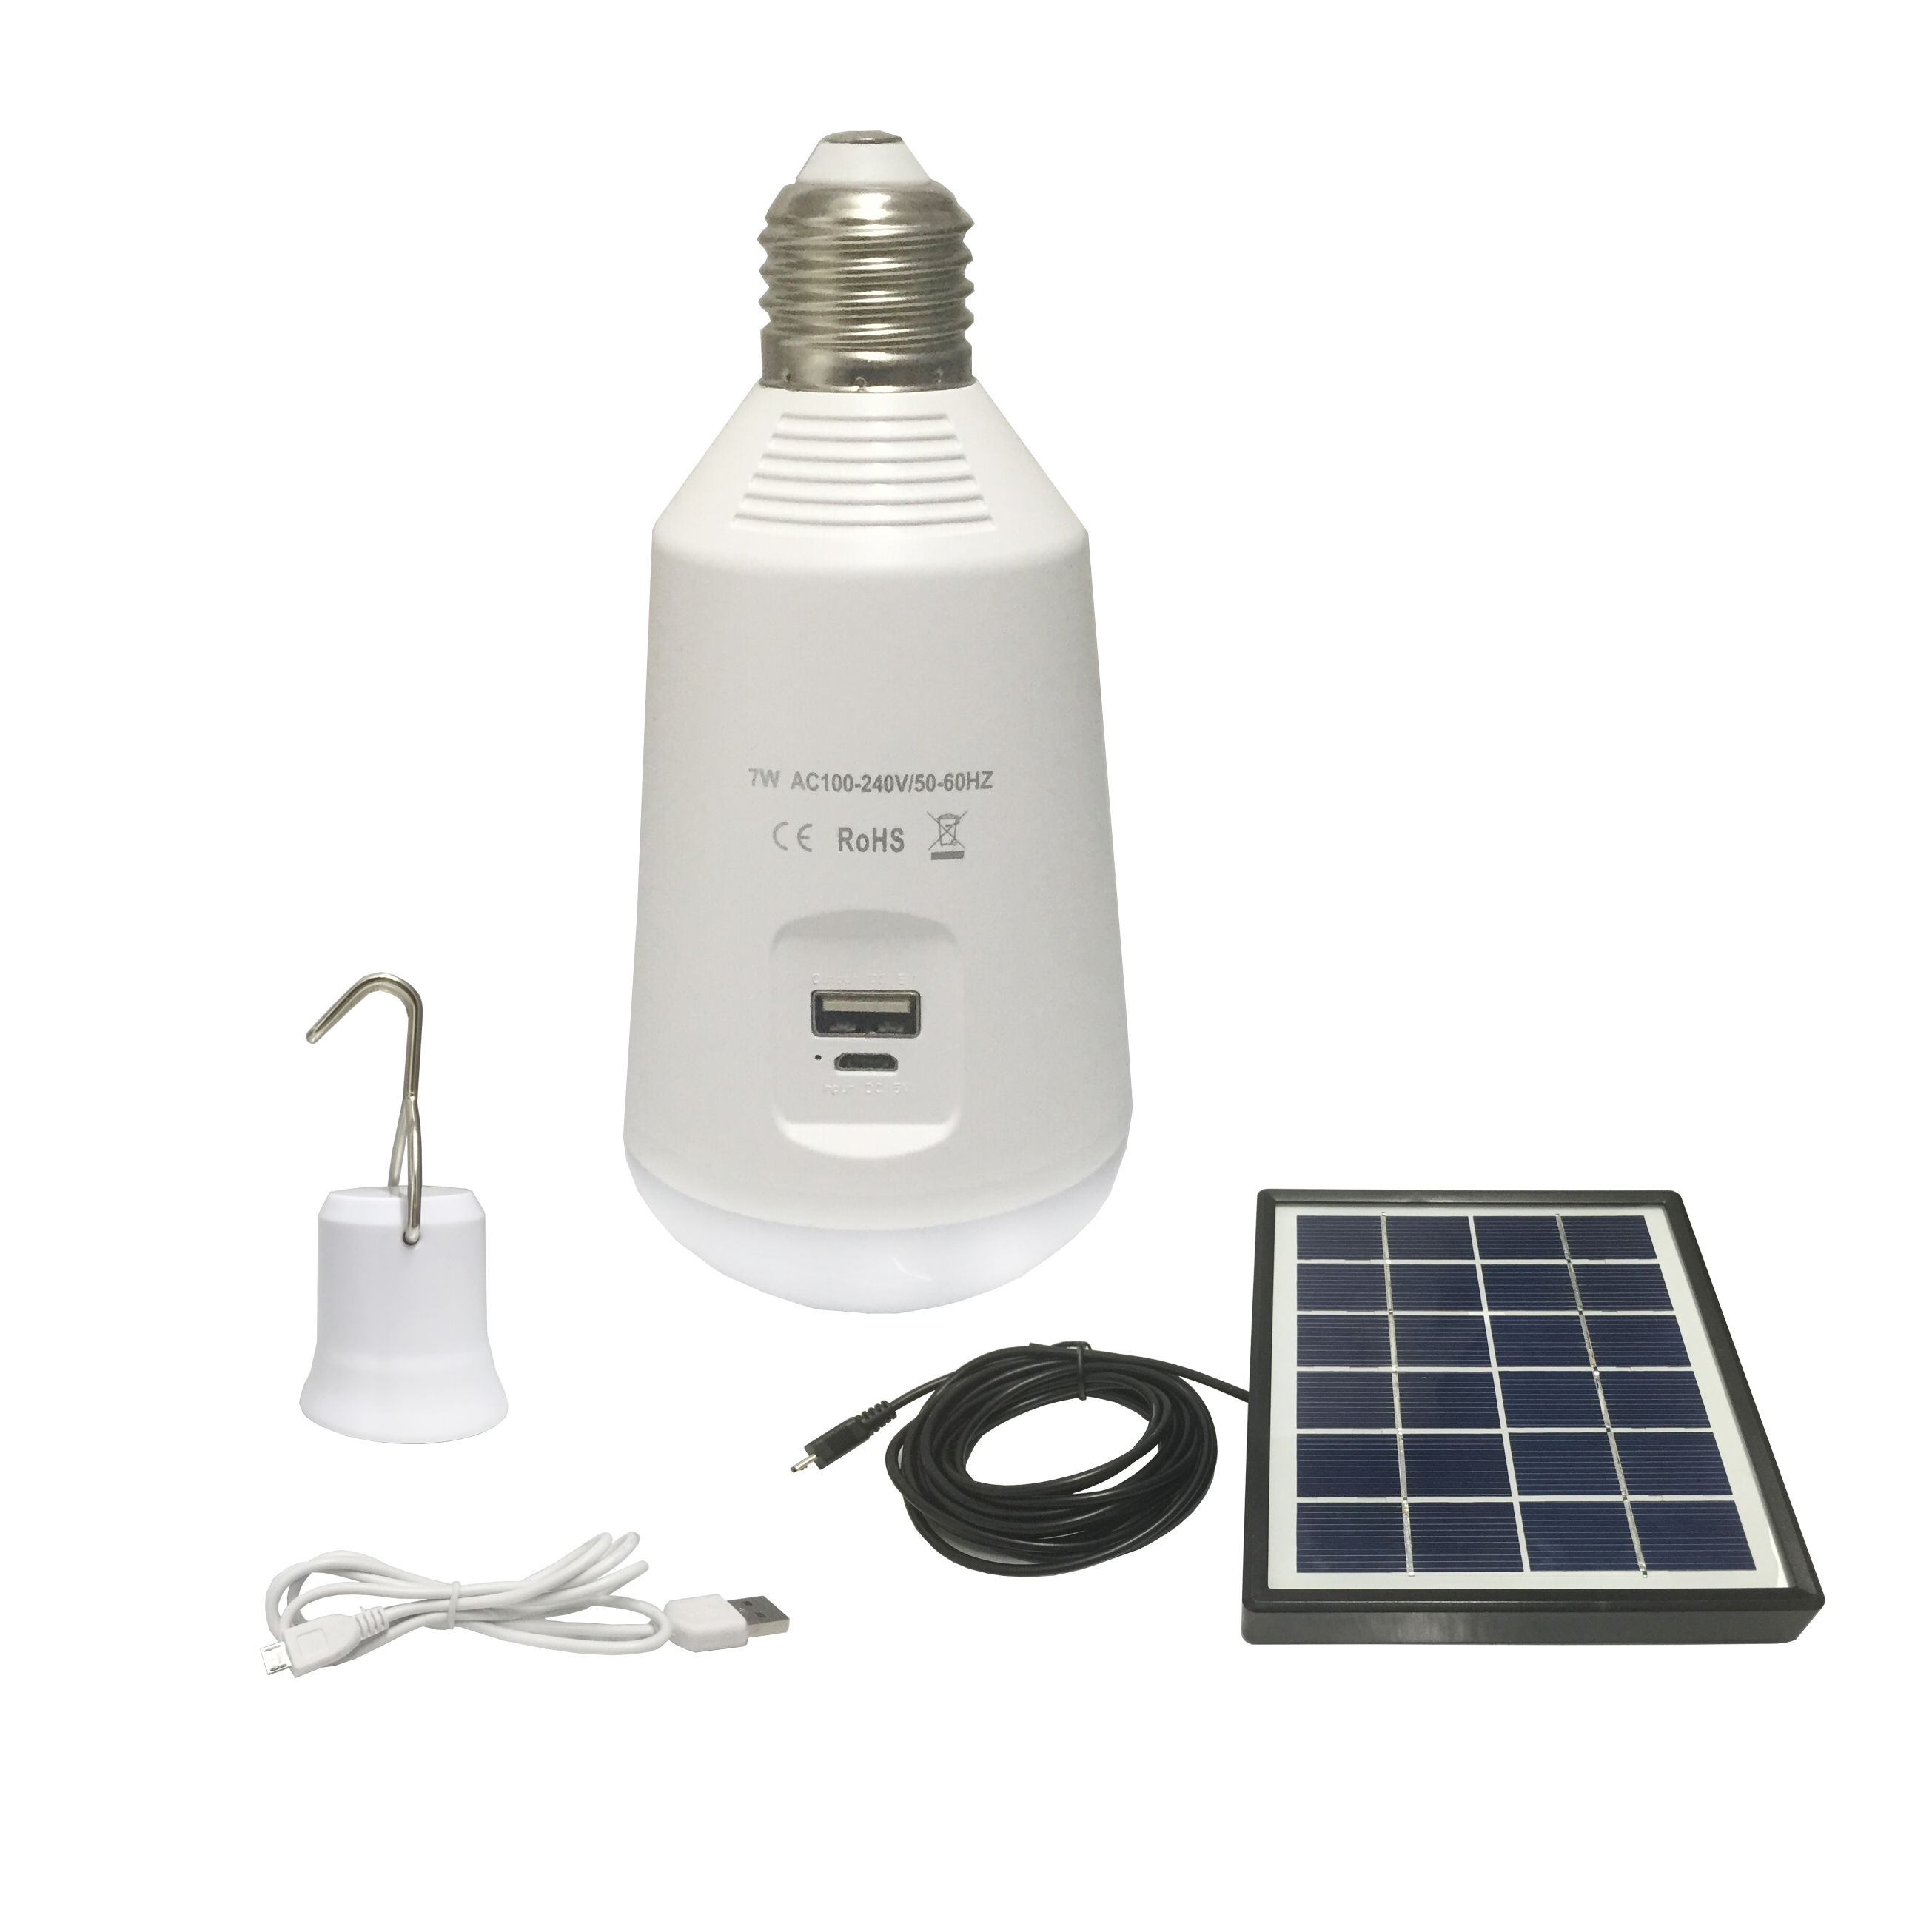 CFH-168A solar panel 7W LED Emergency Bulb use as normal bulb emergency bulb and power bank